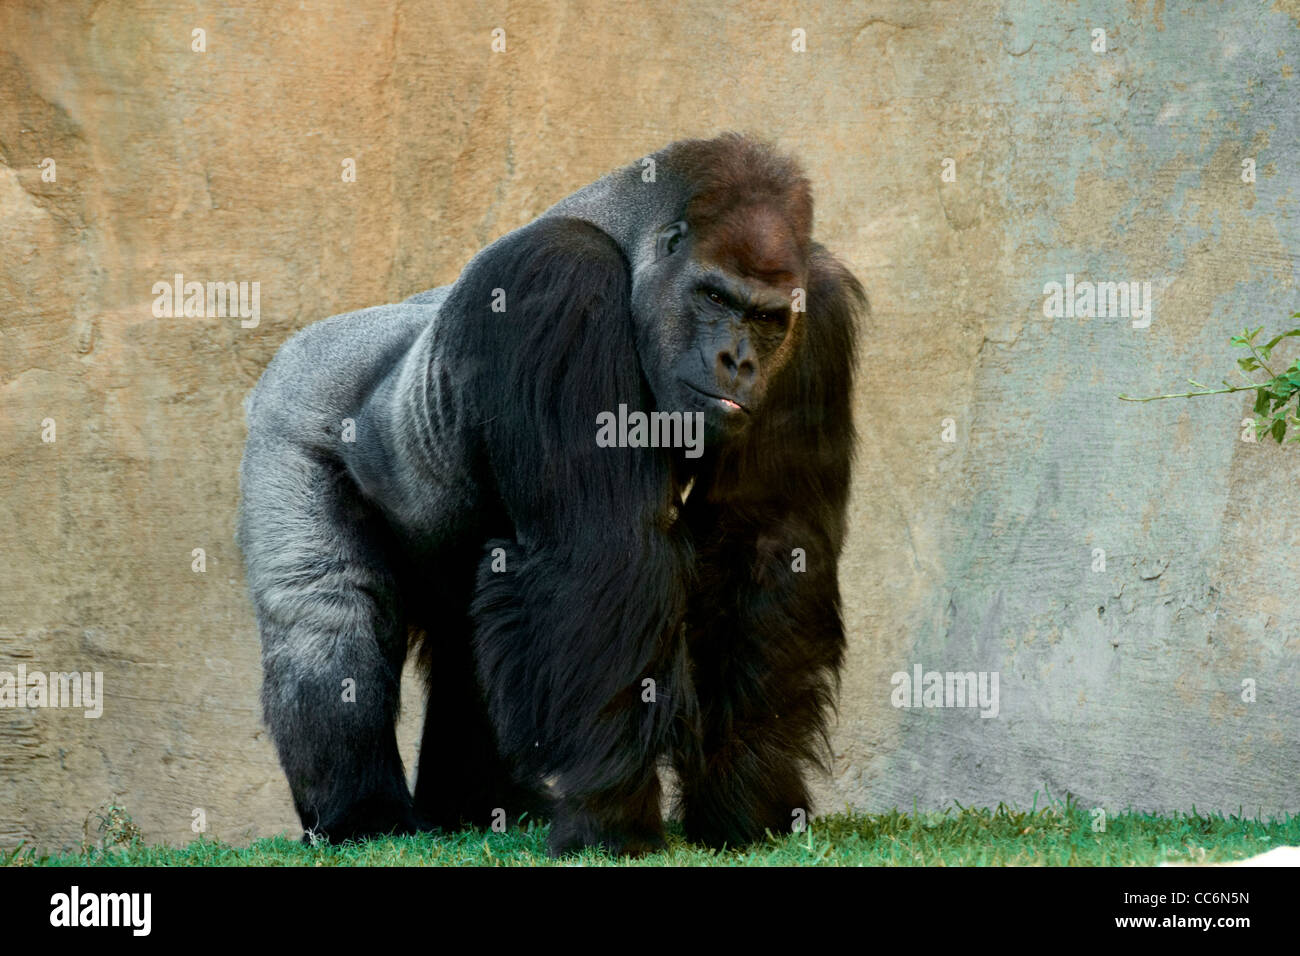 Gorila, los grandes simios, cautiva Foto de stock